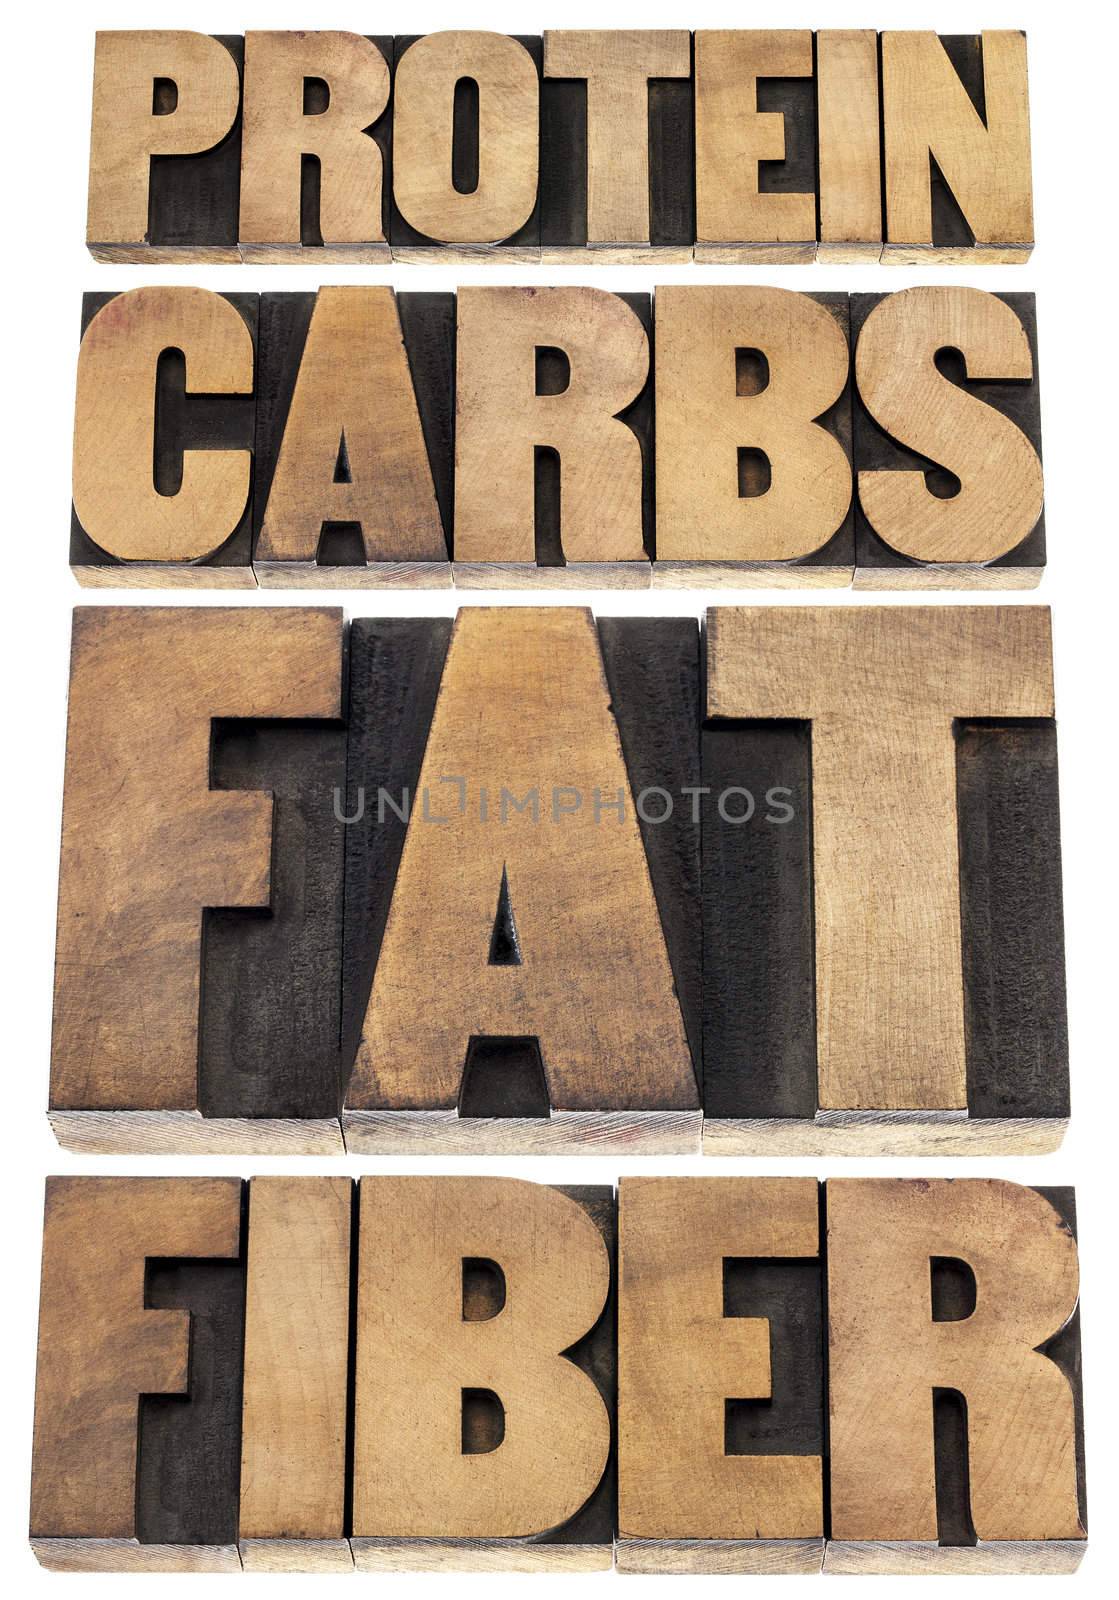 protein, carbs, fat, fiber by PixelsAway